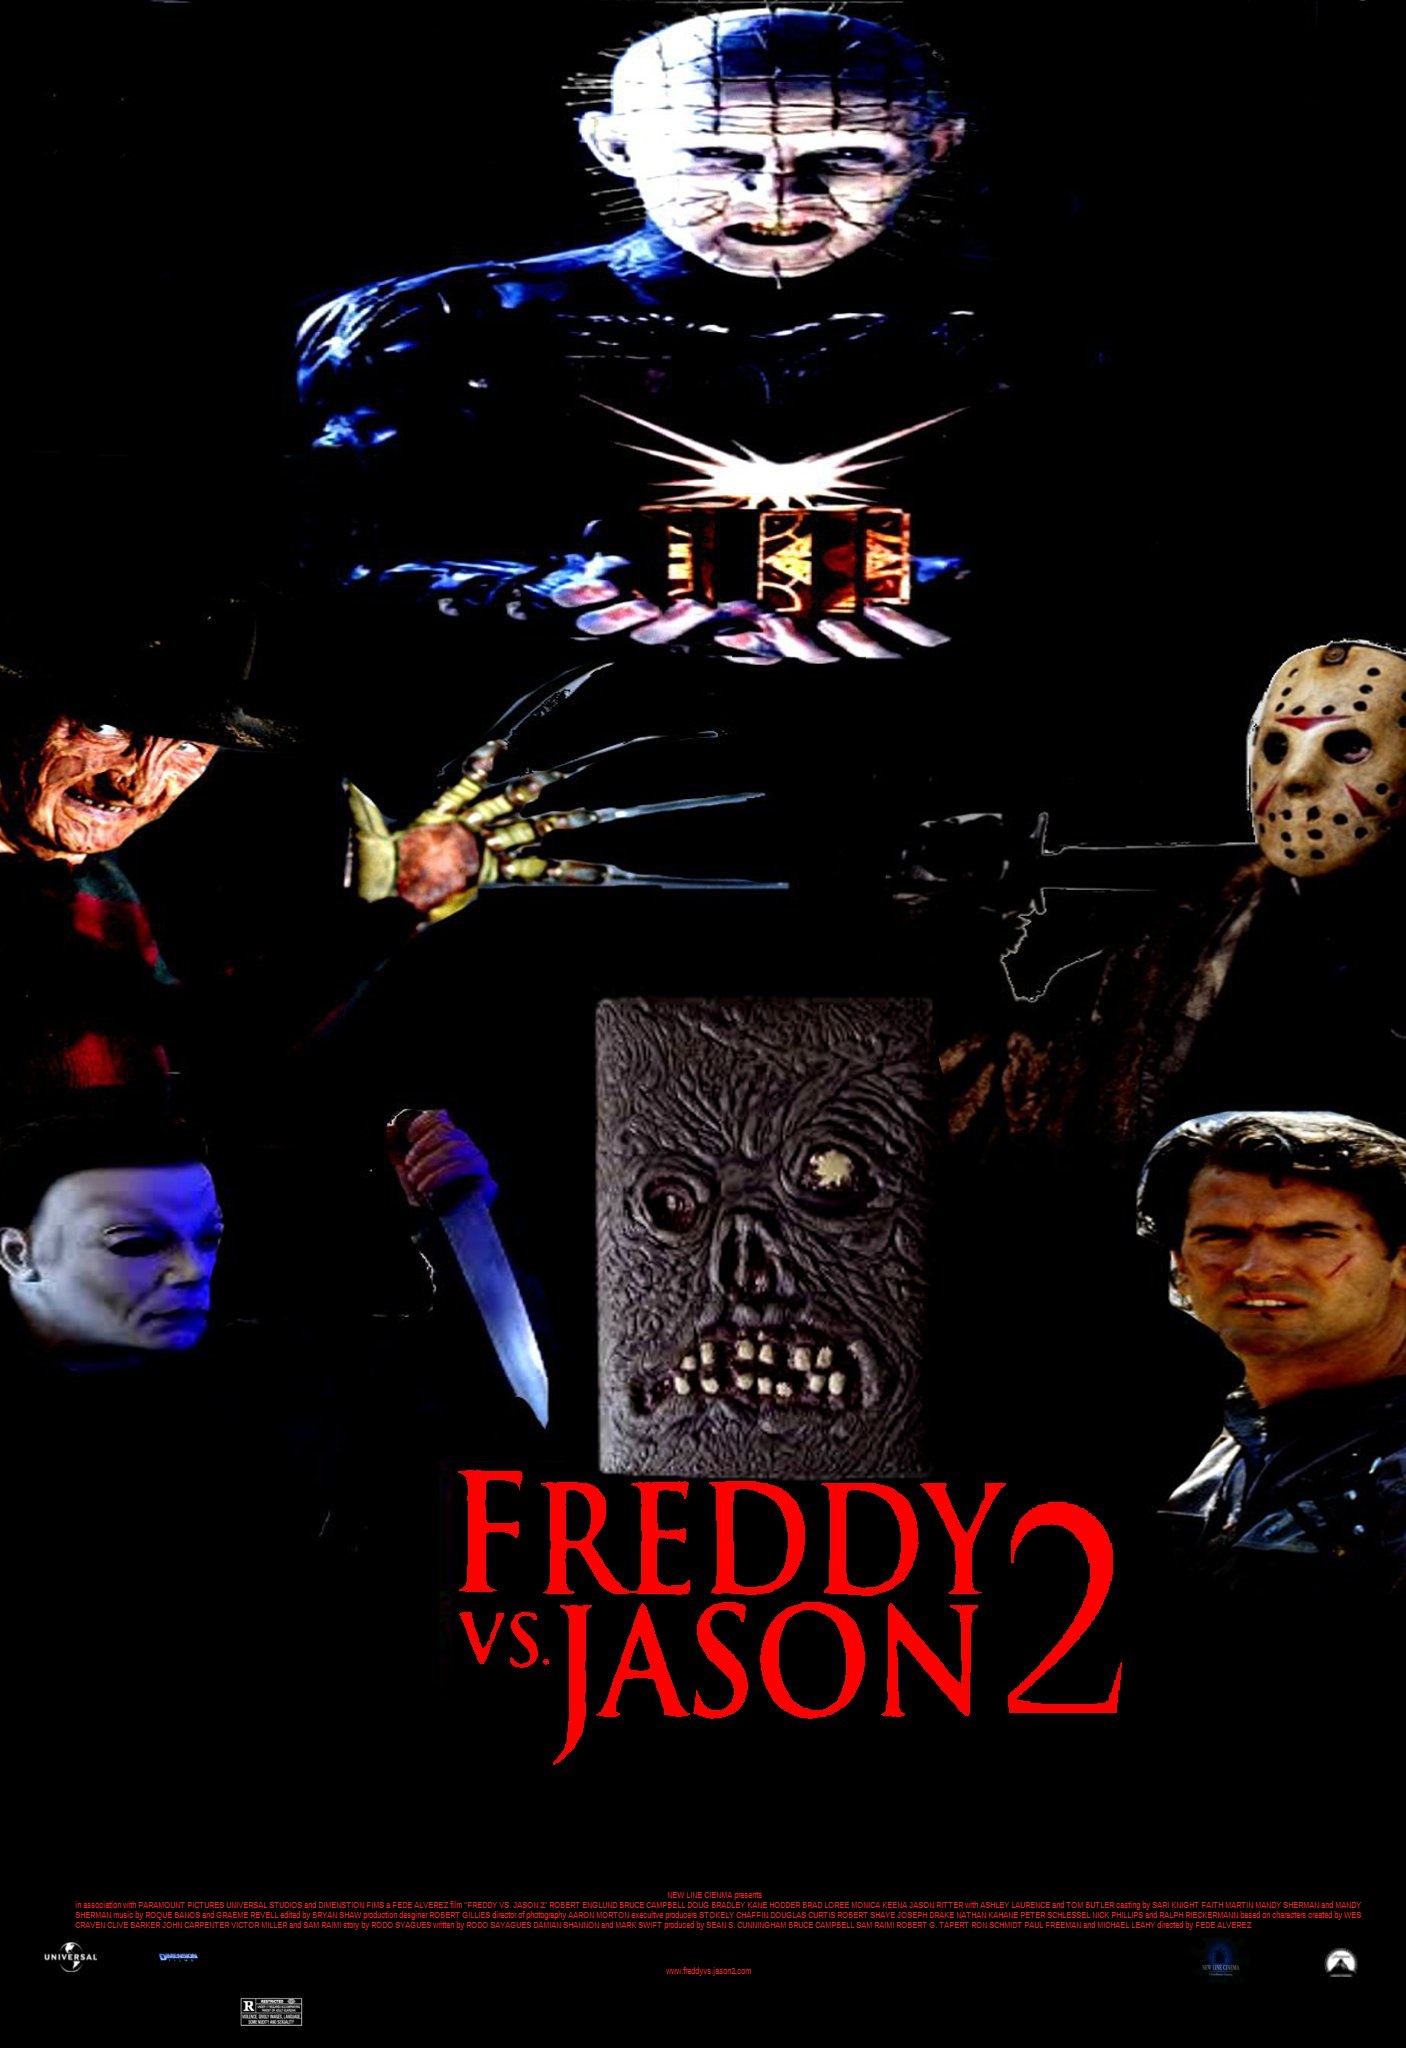 Freddy Vs Jason 2 Poster Version 1 By Steveirwinfan96 On Deviantart